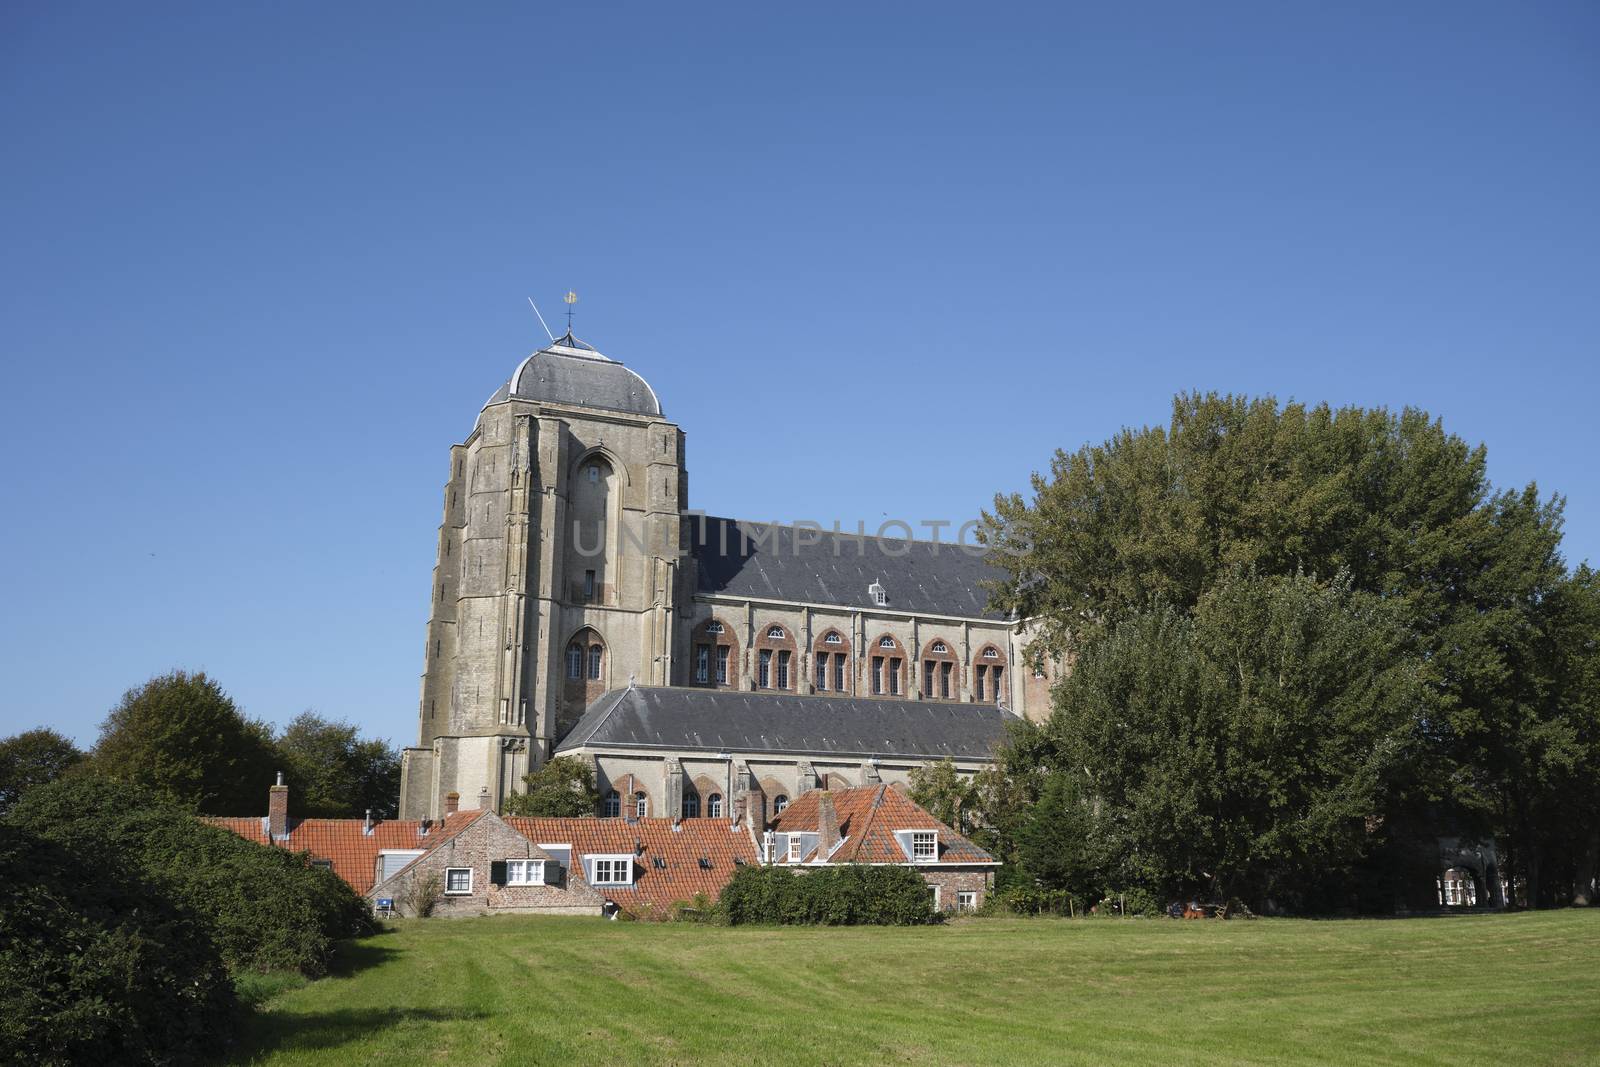 Grote Kerk or Church in the city of Veere, The Netherlands by Tjeerdkruse